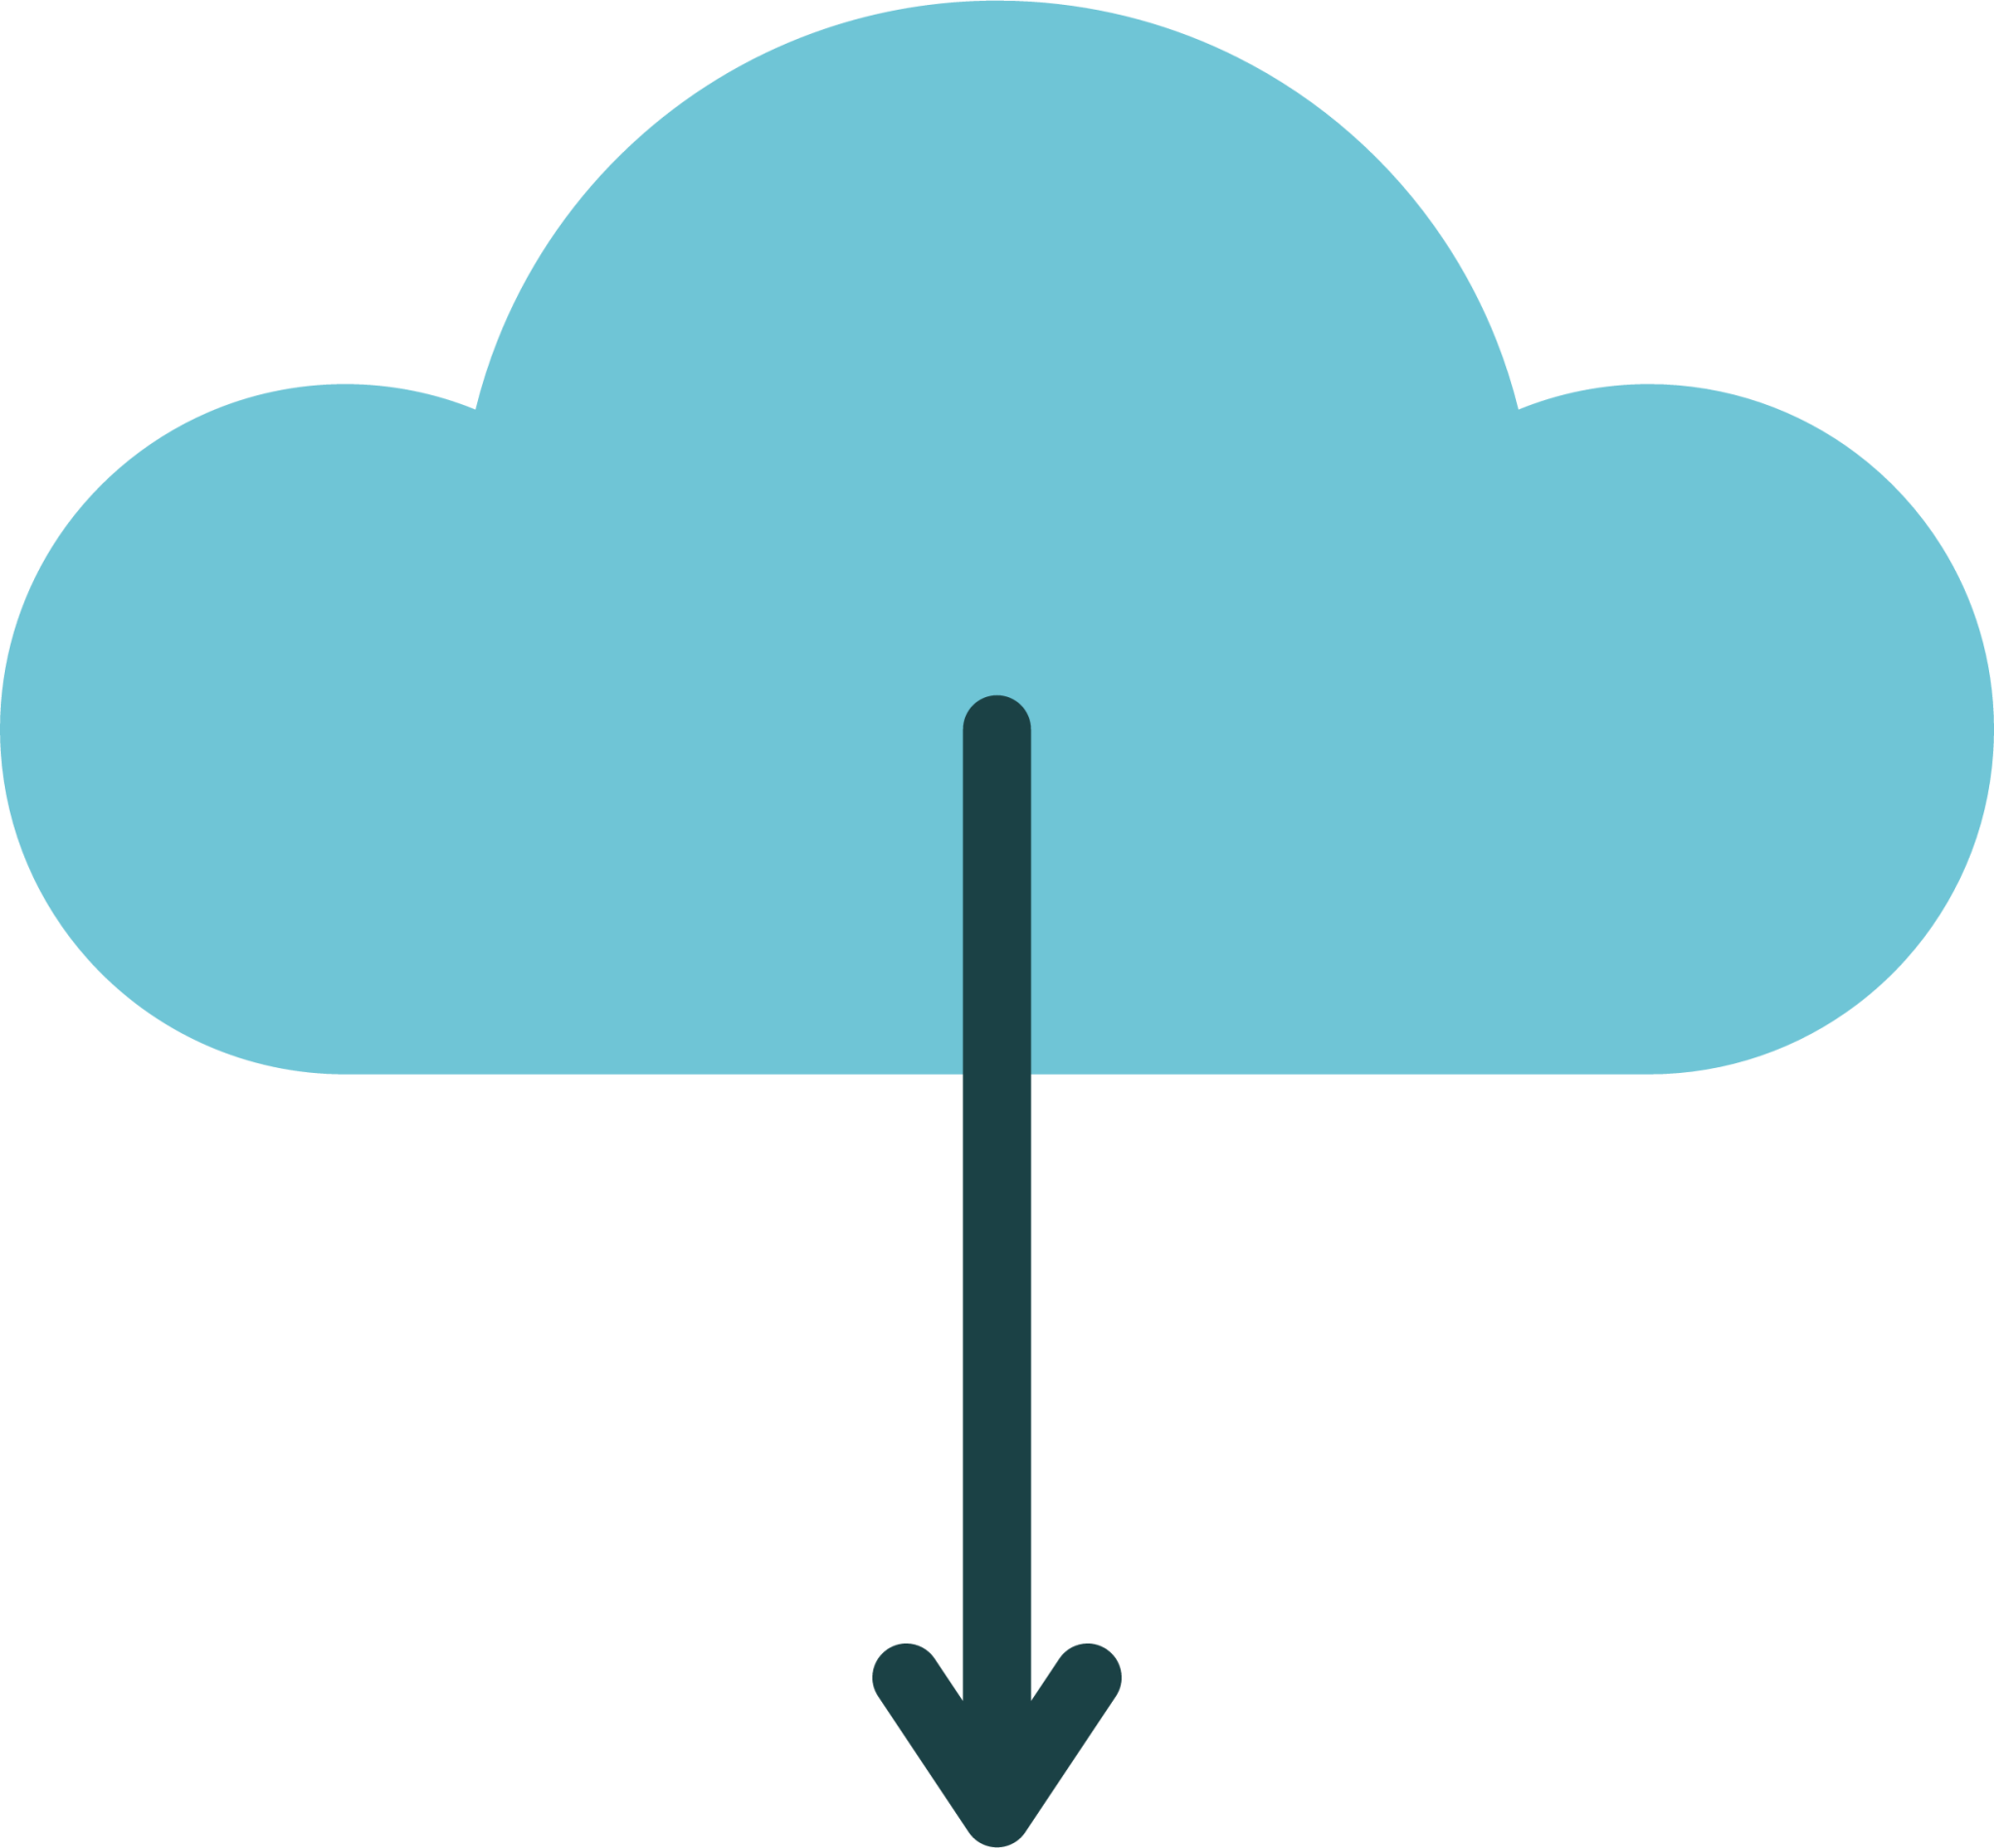 cloud computing 1 icon